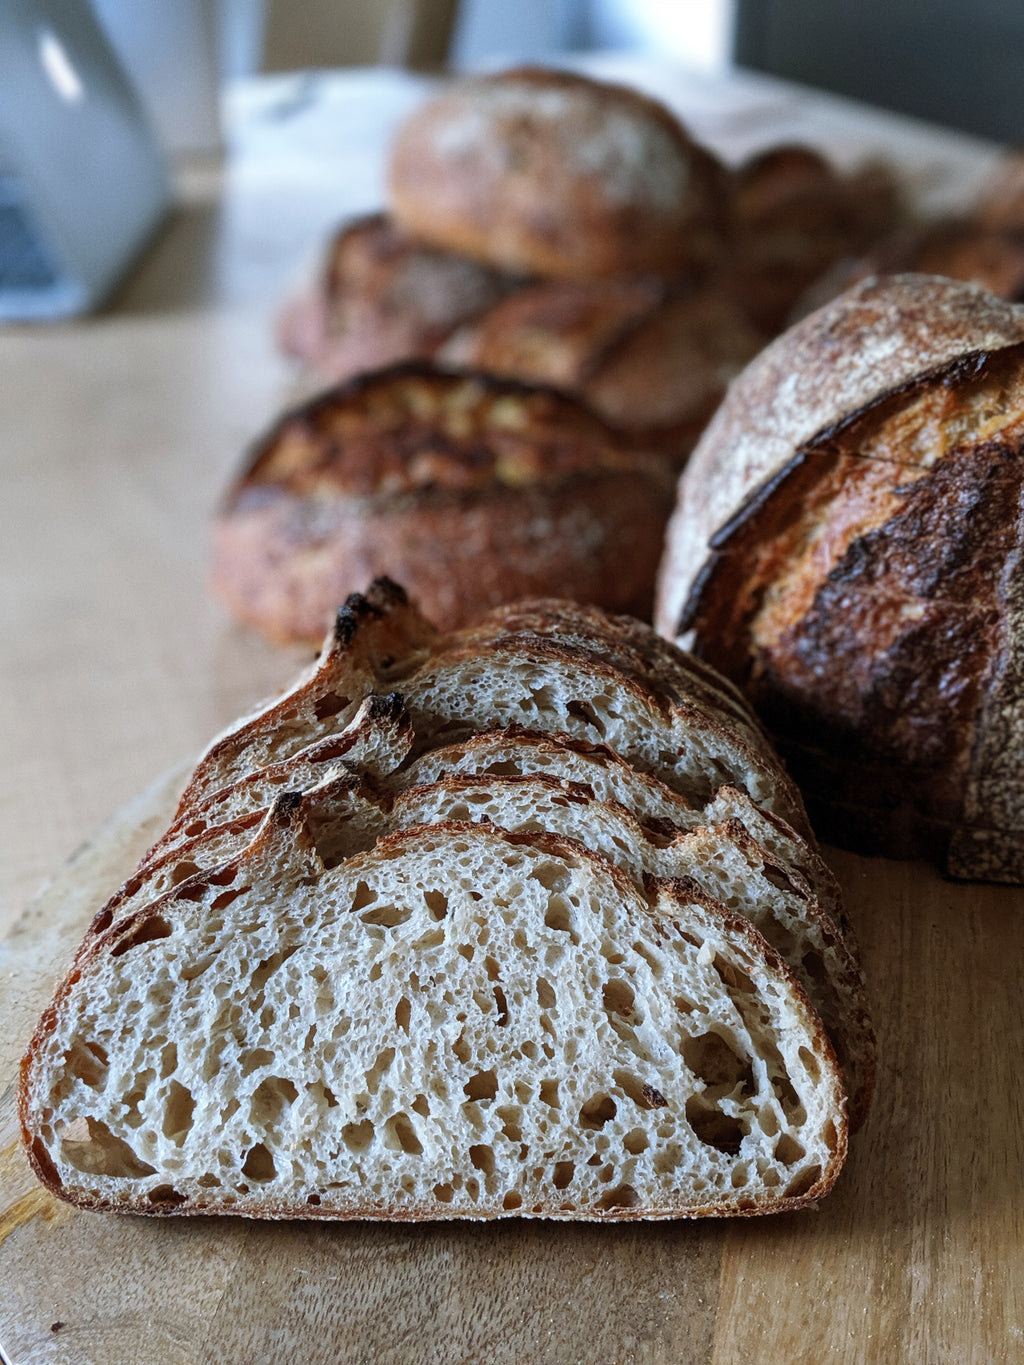 50% Organic Wholewheat Sourdough Loaf